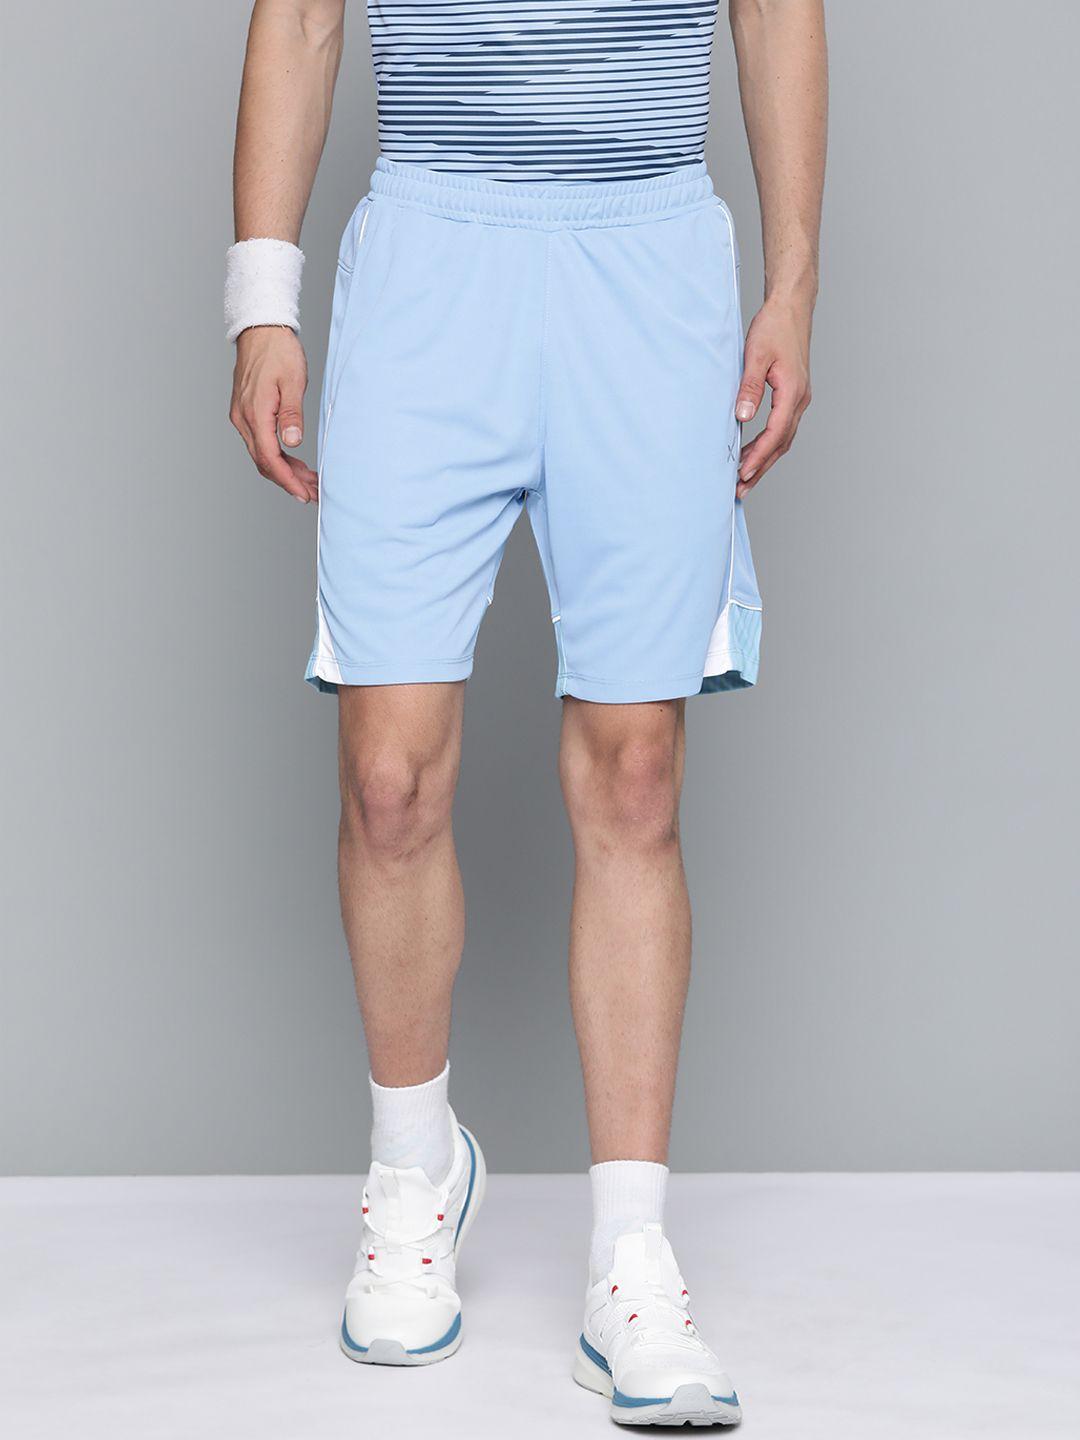 hrx by hrithik roshan racketsport men blue fod rapid-dry shorts